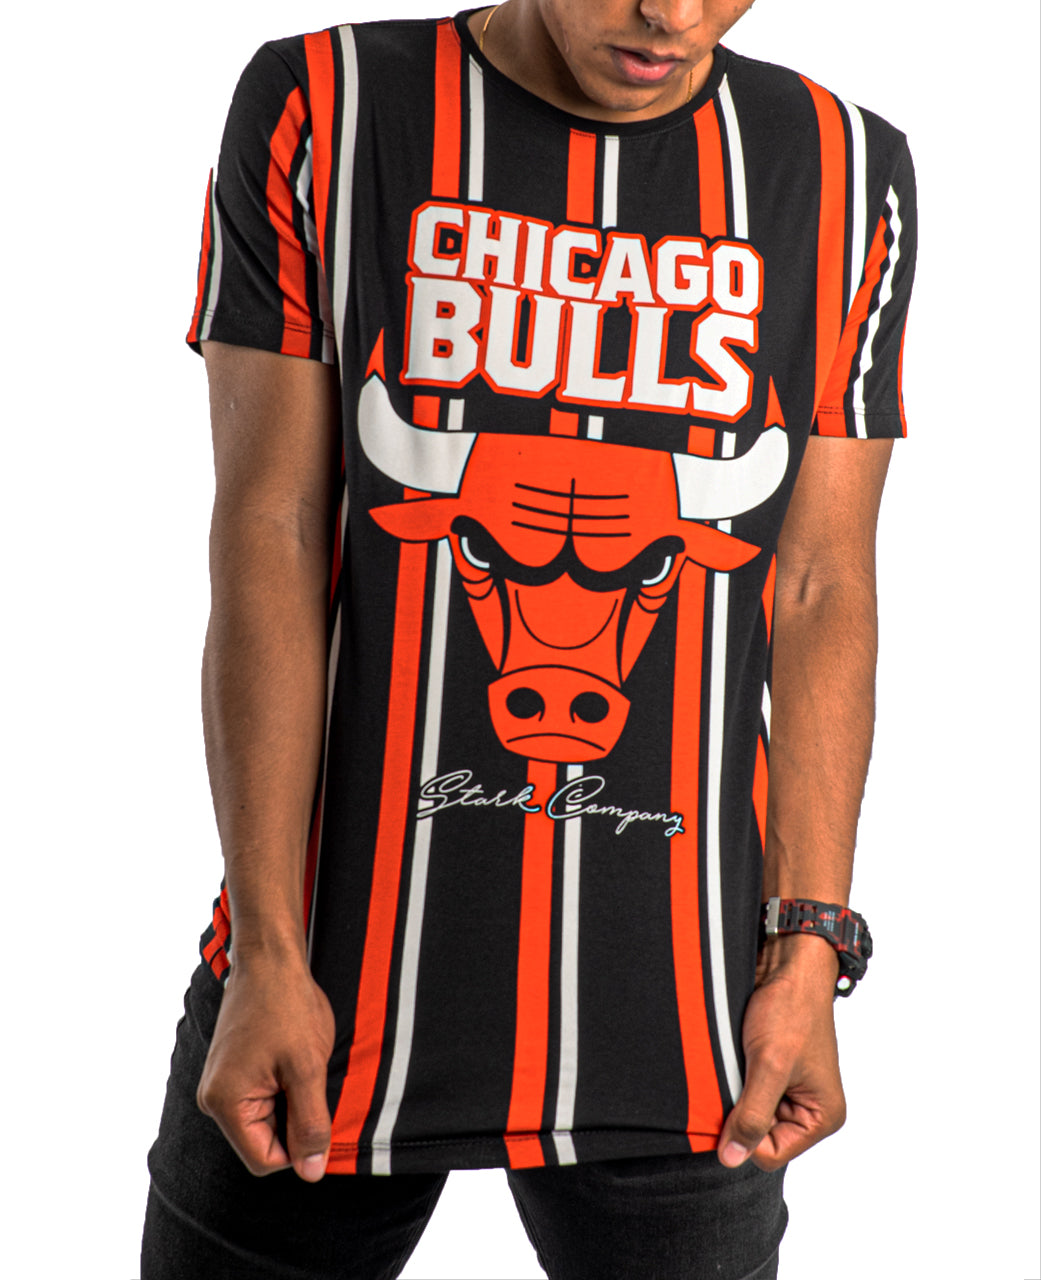 Chicago Bulls Lineas Rojas y Blancas - Stark Brand